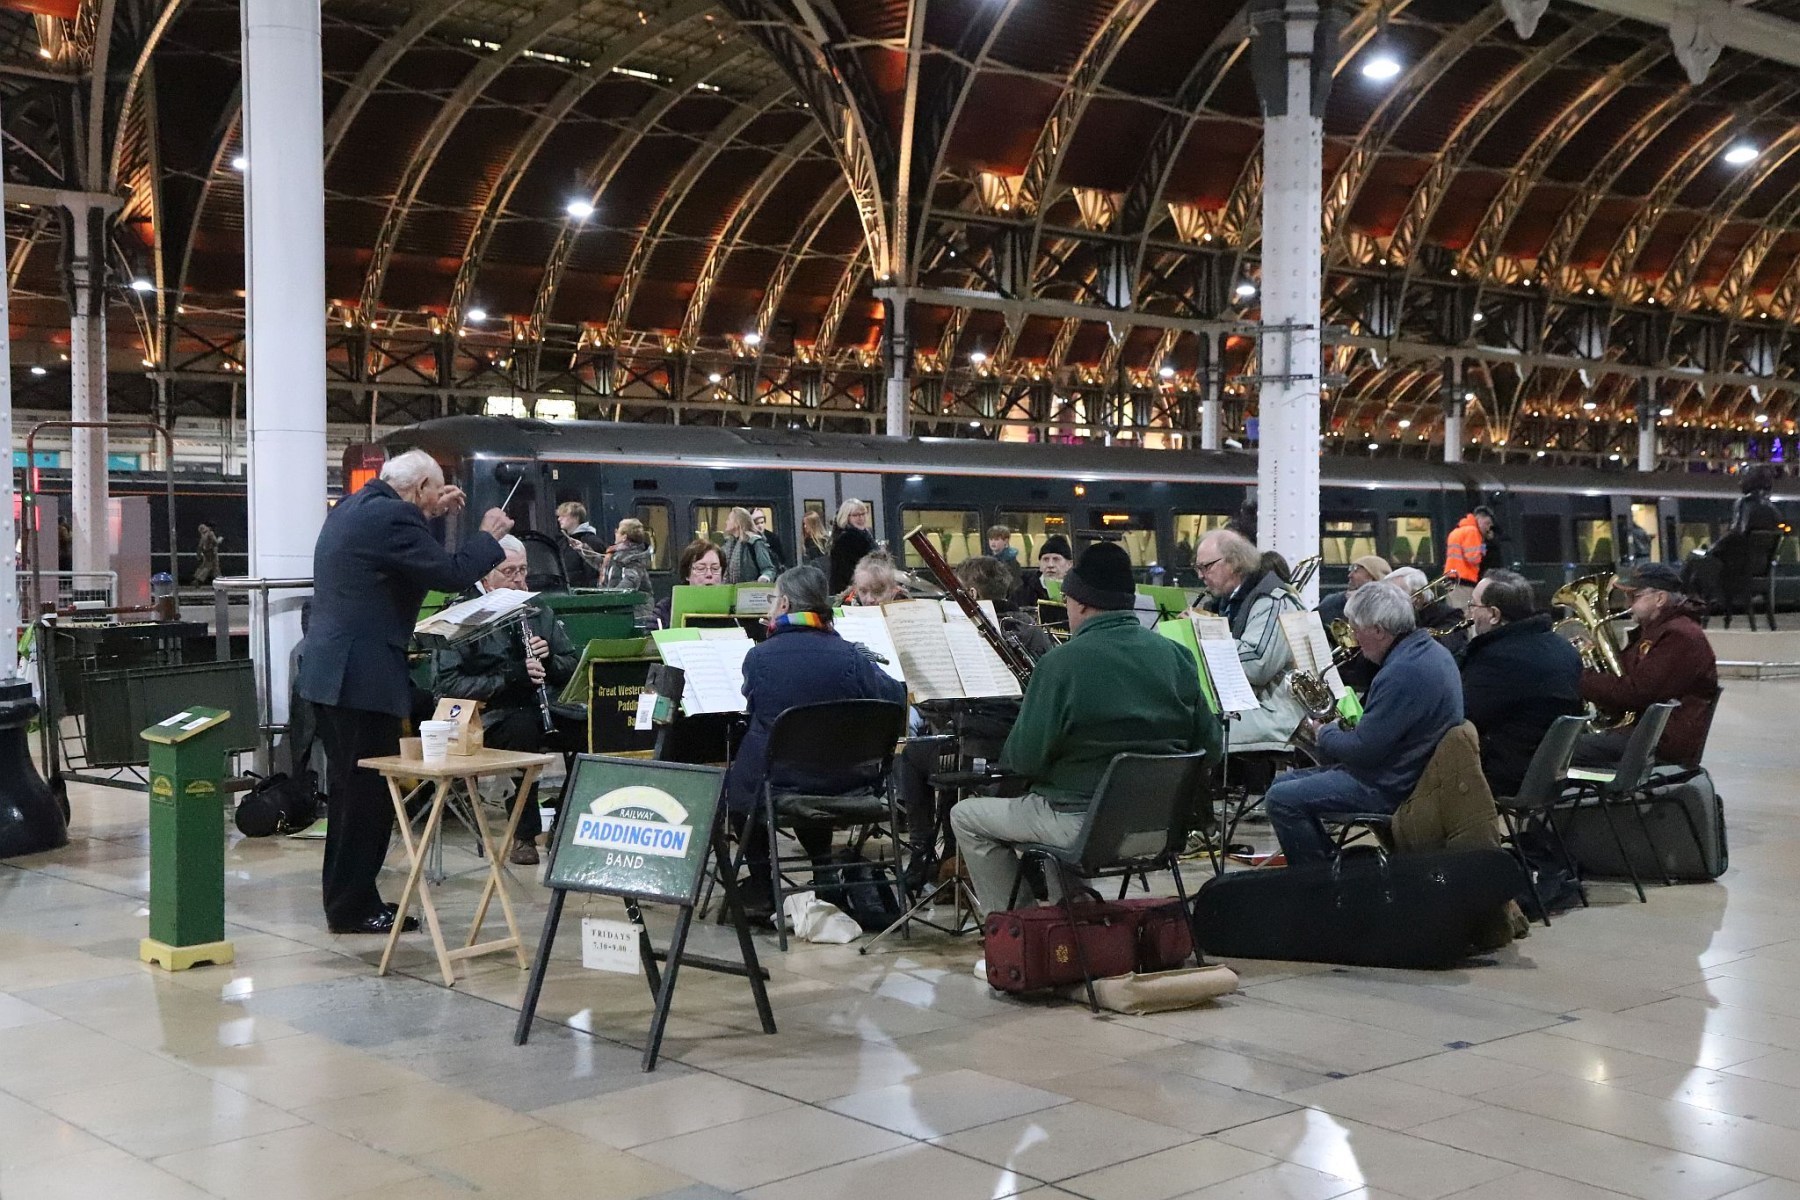 Great Western Railway Paddington Band Friday evening performance at London Paddington Railway Station, 3rd March 2023, 03-Mar-2023